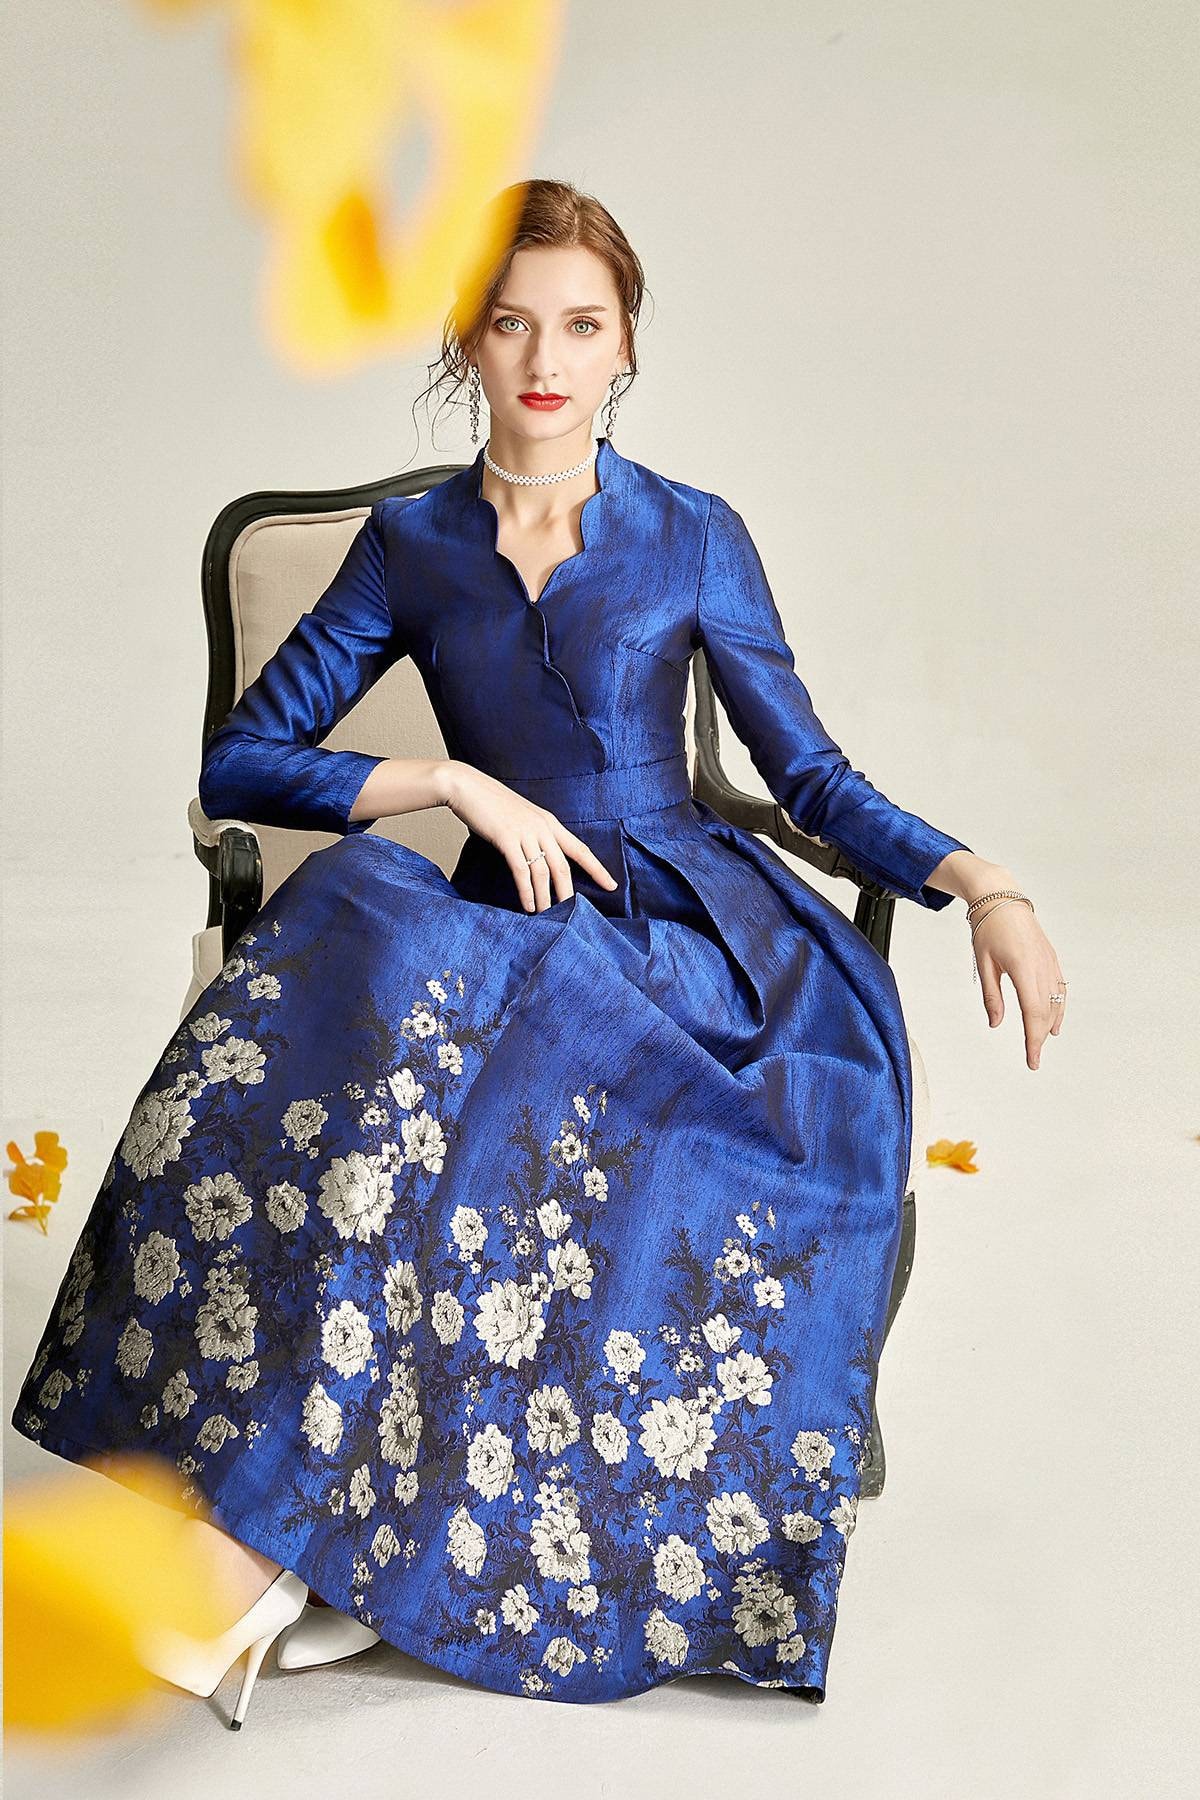 Blue Cape Dress for Women, Midi Elegant Wedding Guest Dress